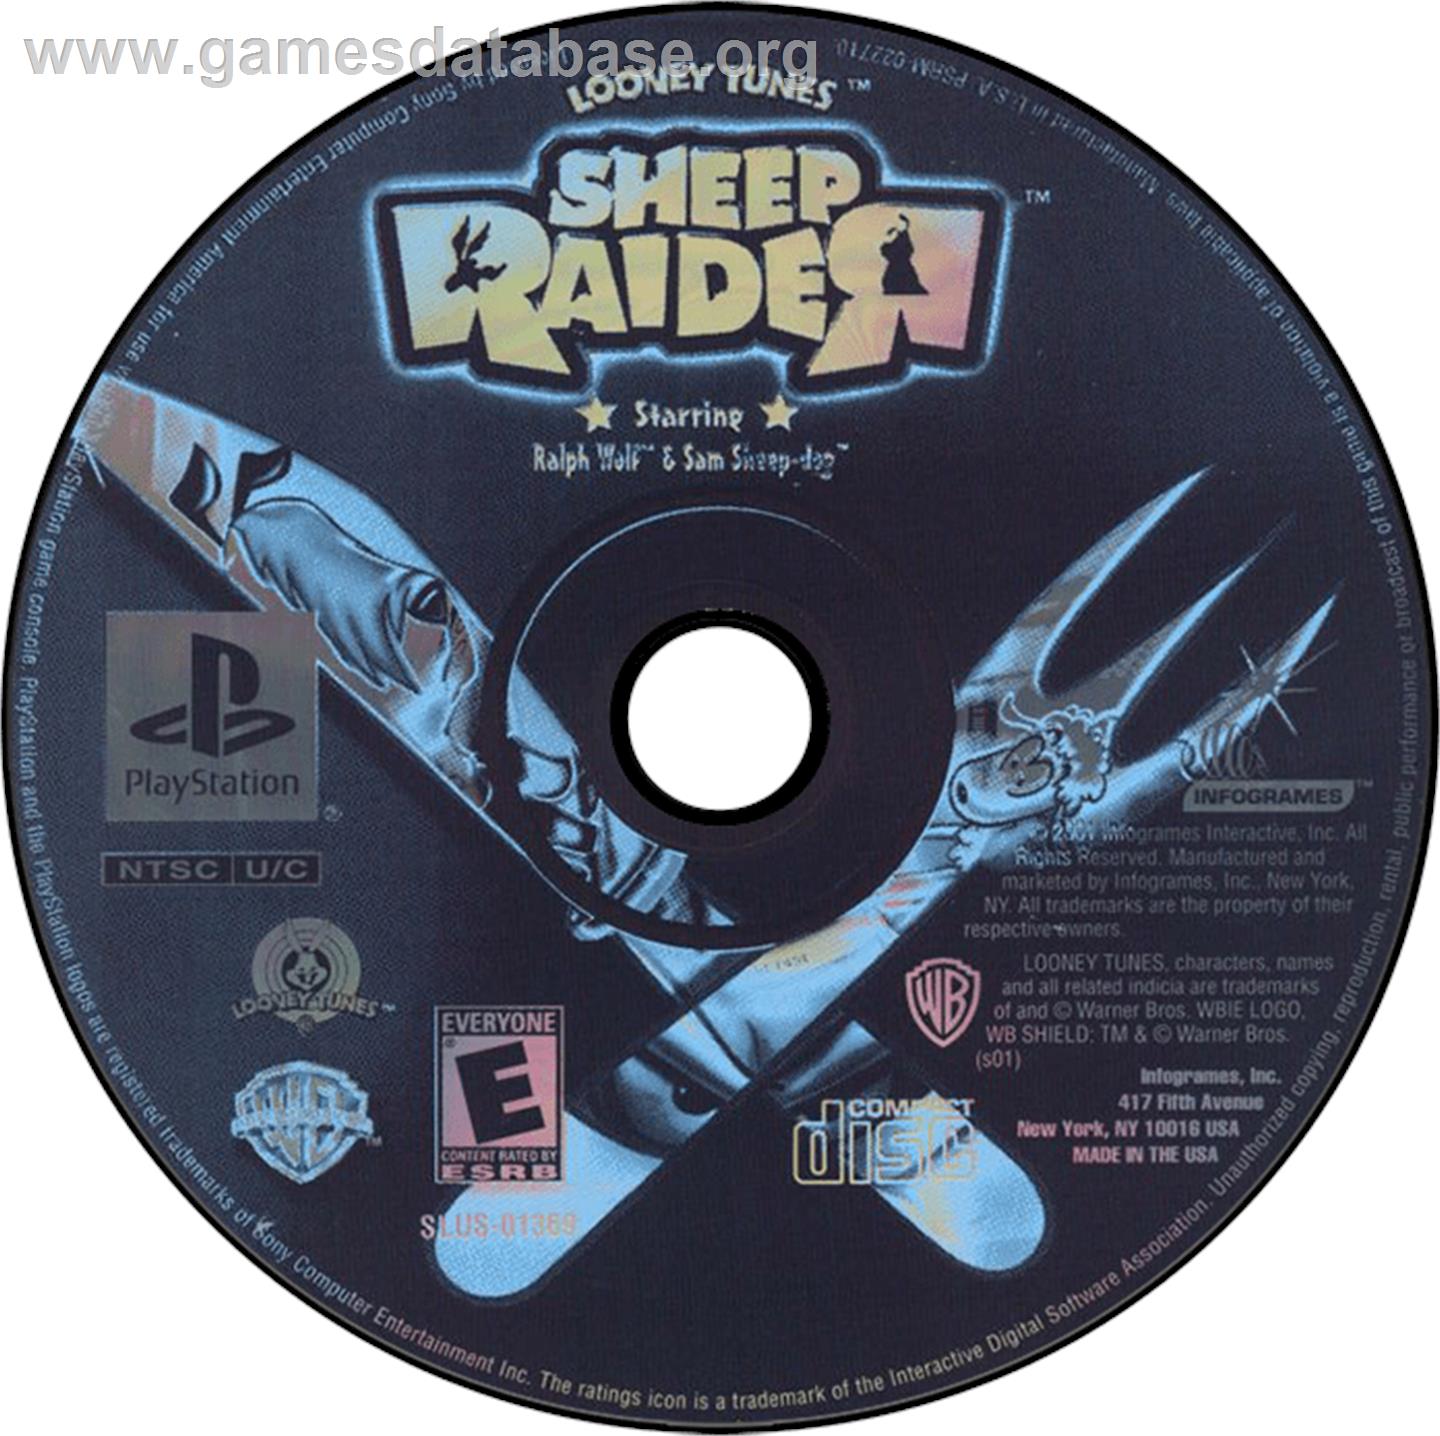 Looney Tunes: Sheep Raider - Sony Playstation - Artwork - Disc